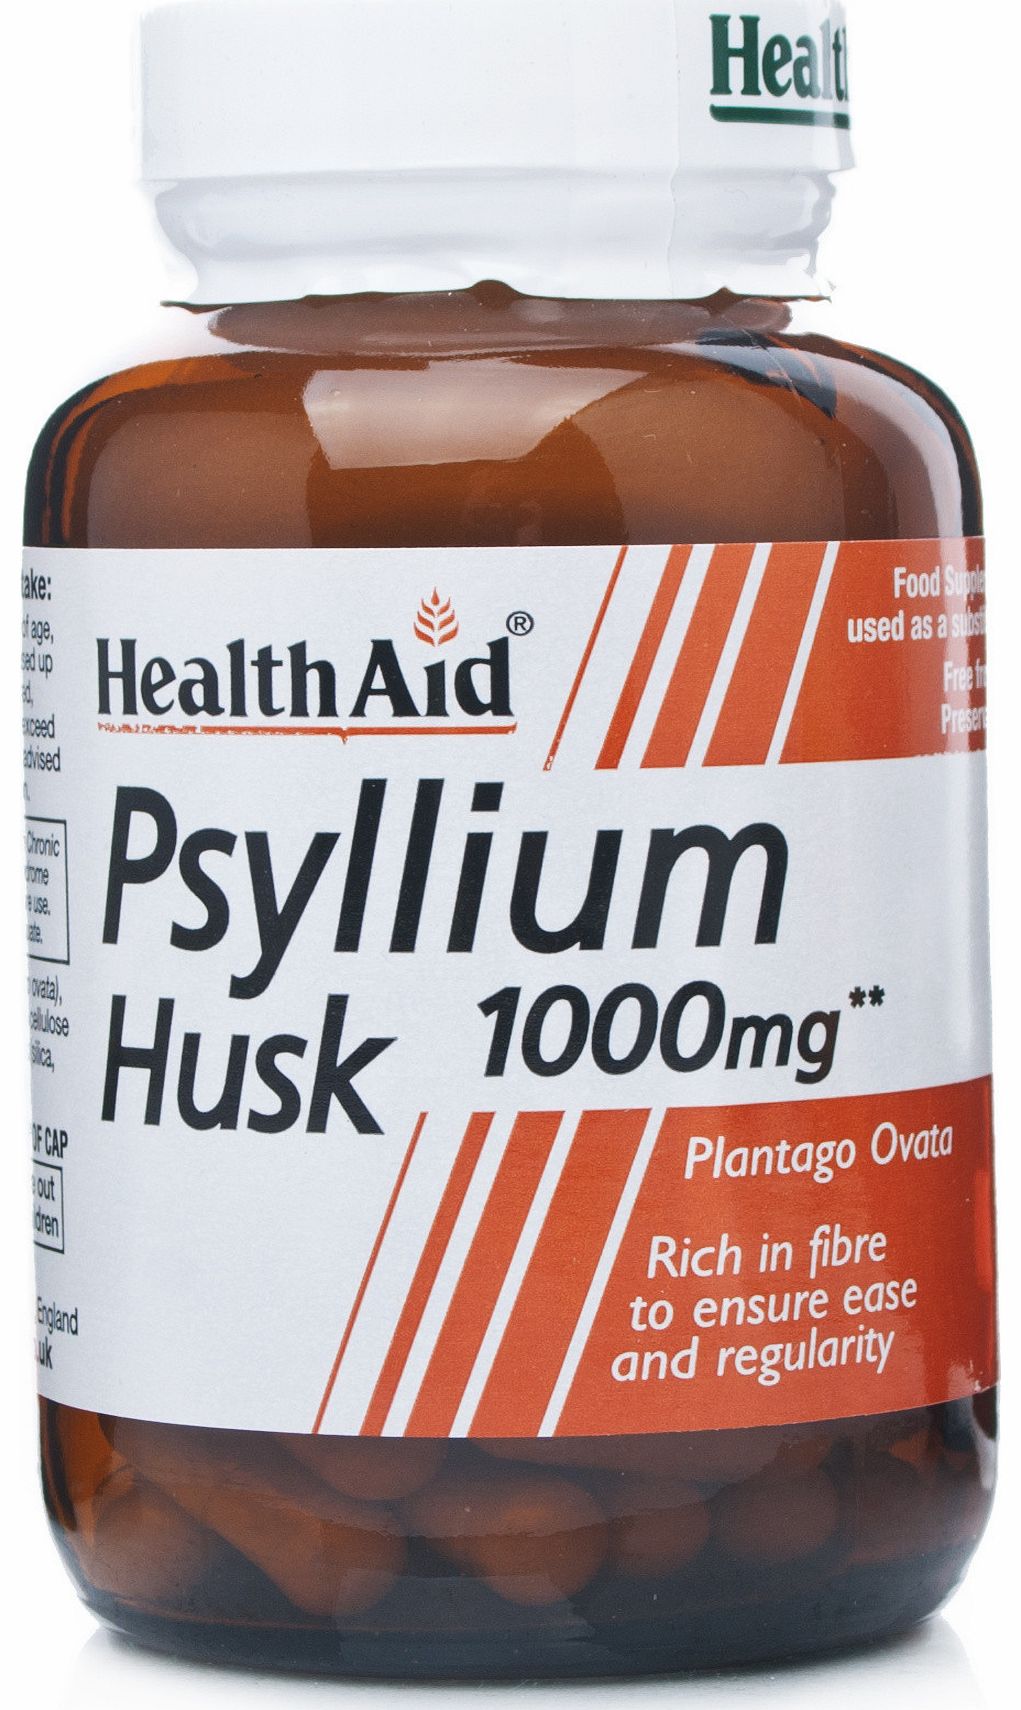 Healthaid Psyllium Husk 1000mg